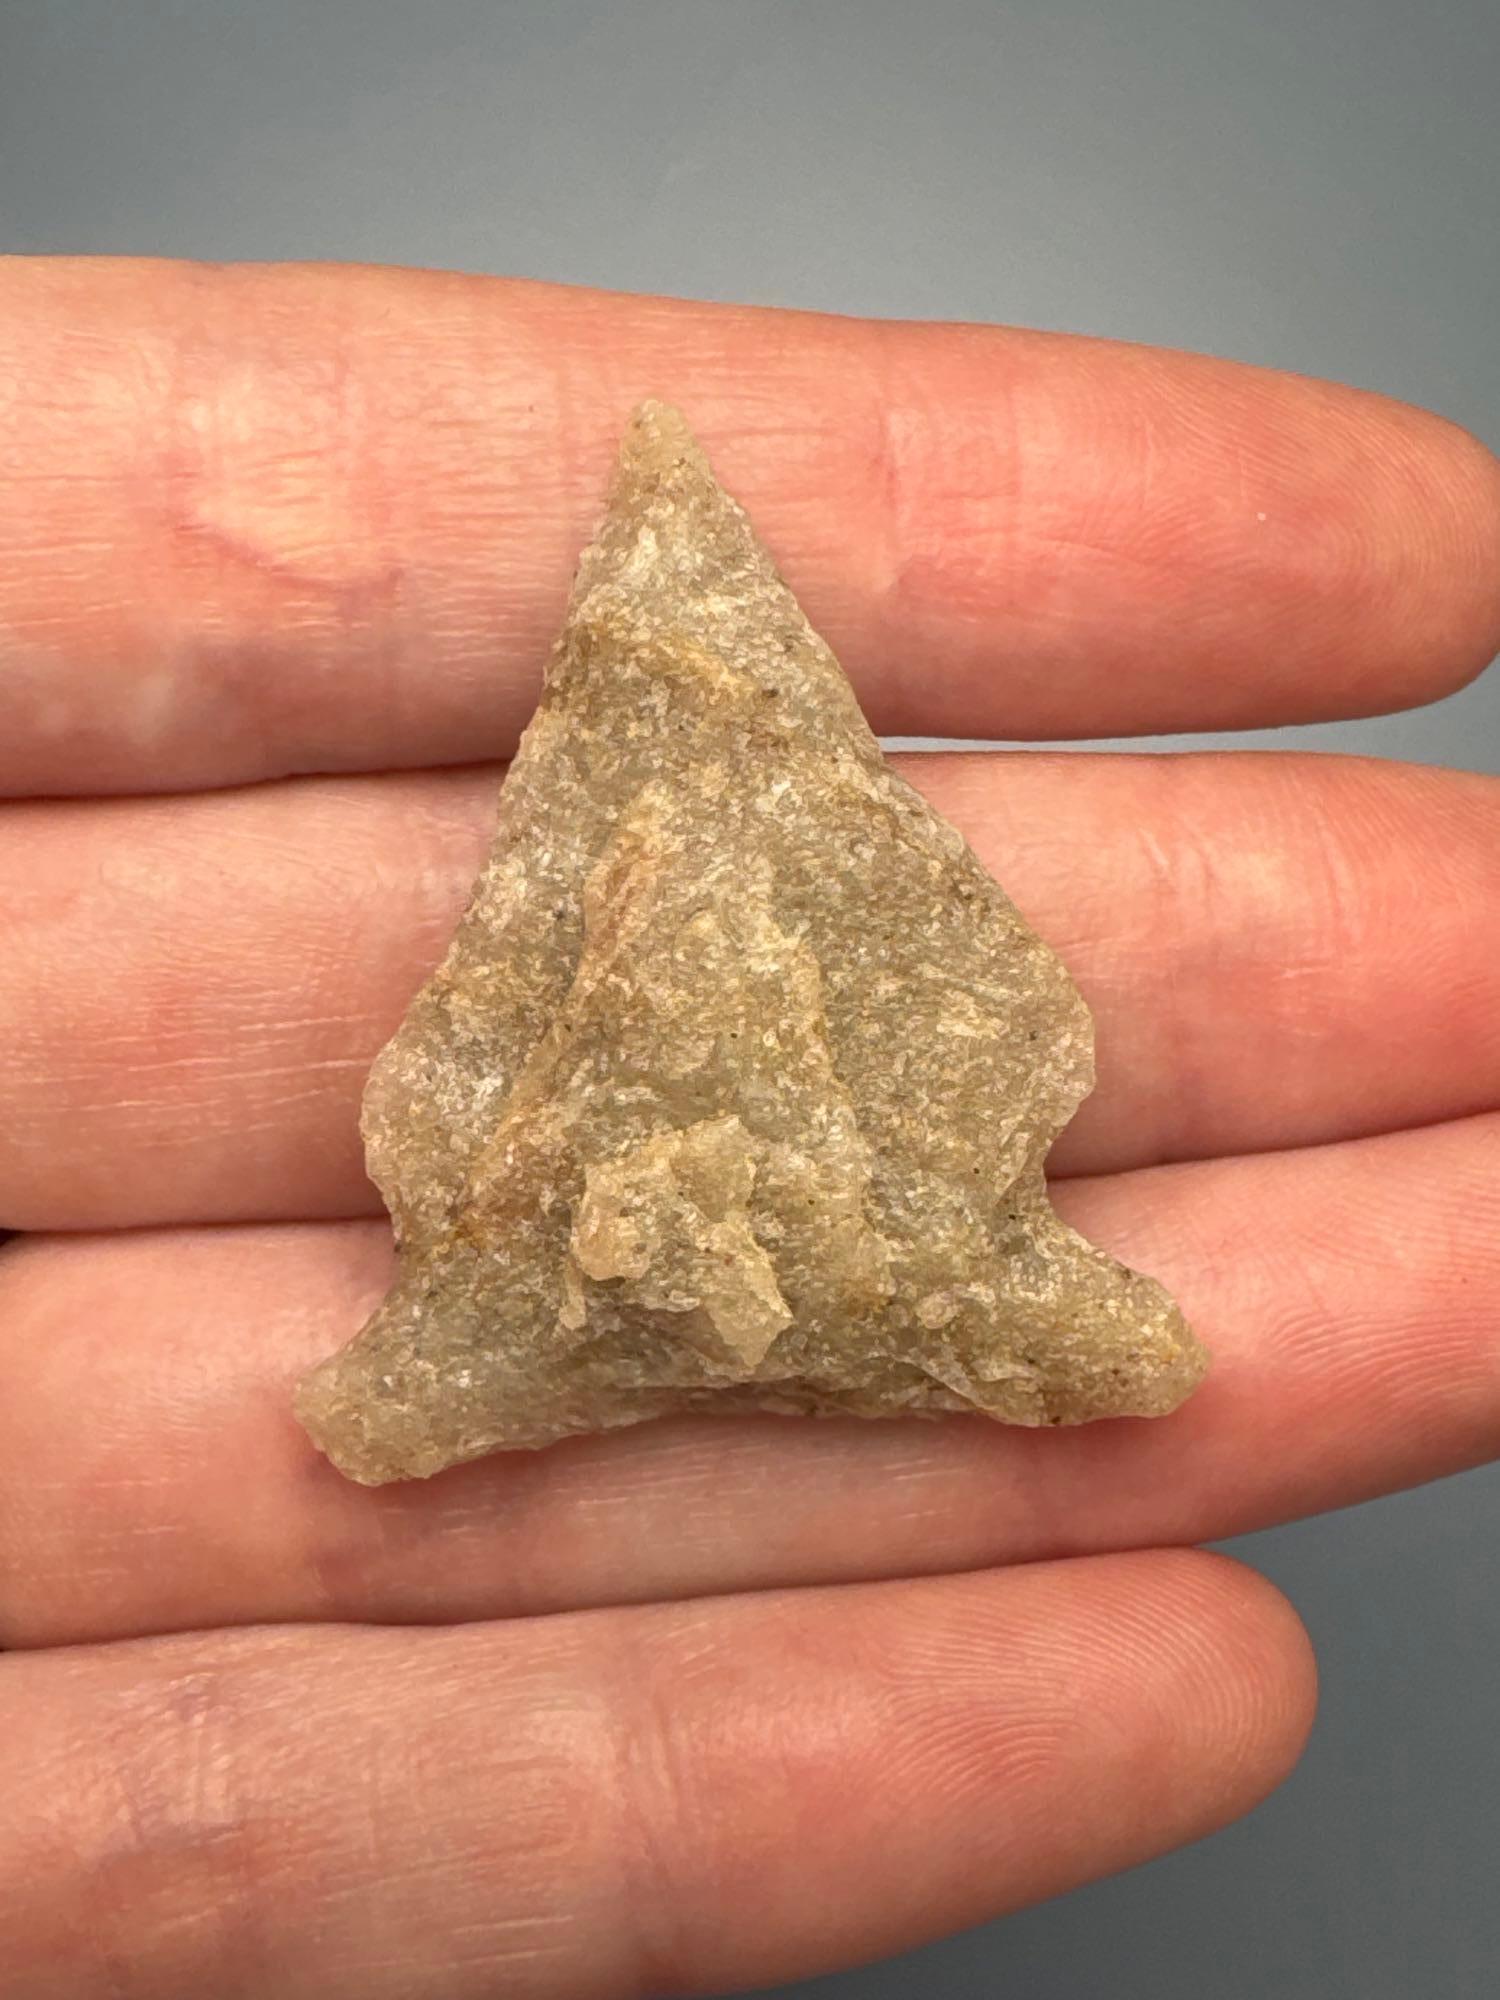 NICE 1 1/2" Quartzite Side Notch Eared Brewerton, Found in Hunterdon Co., NJ